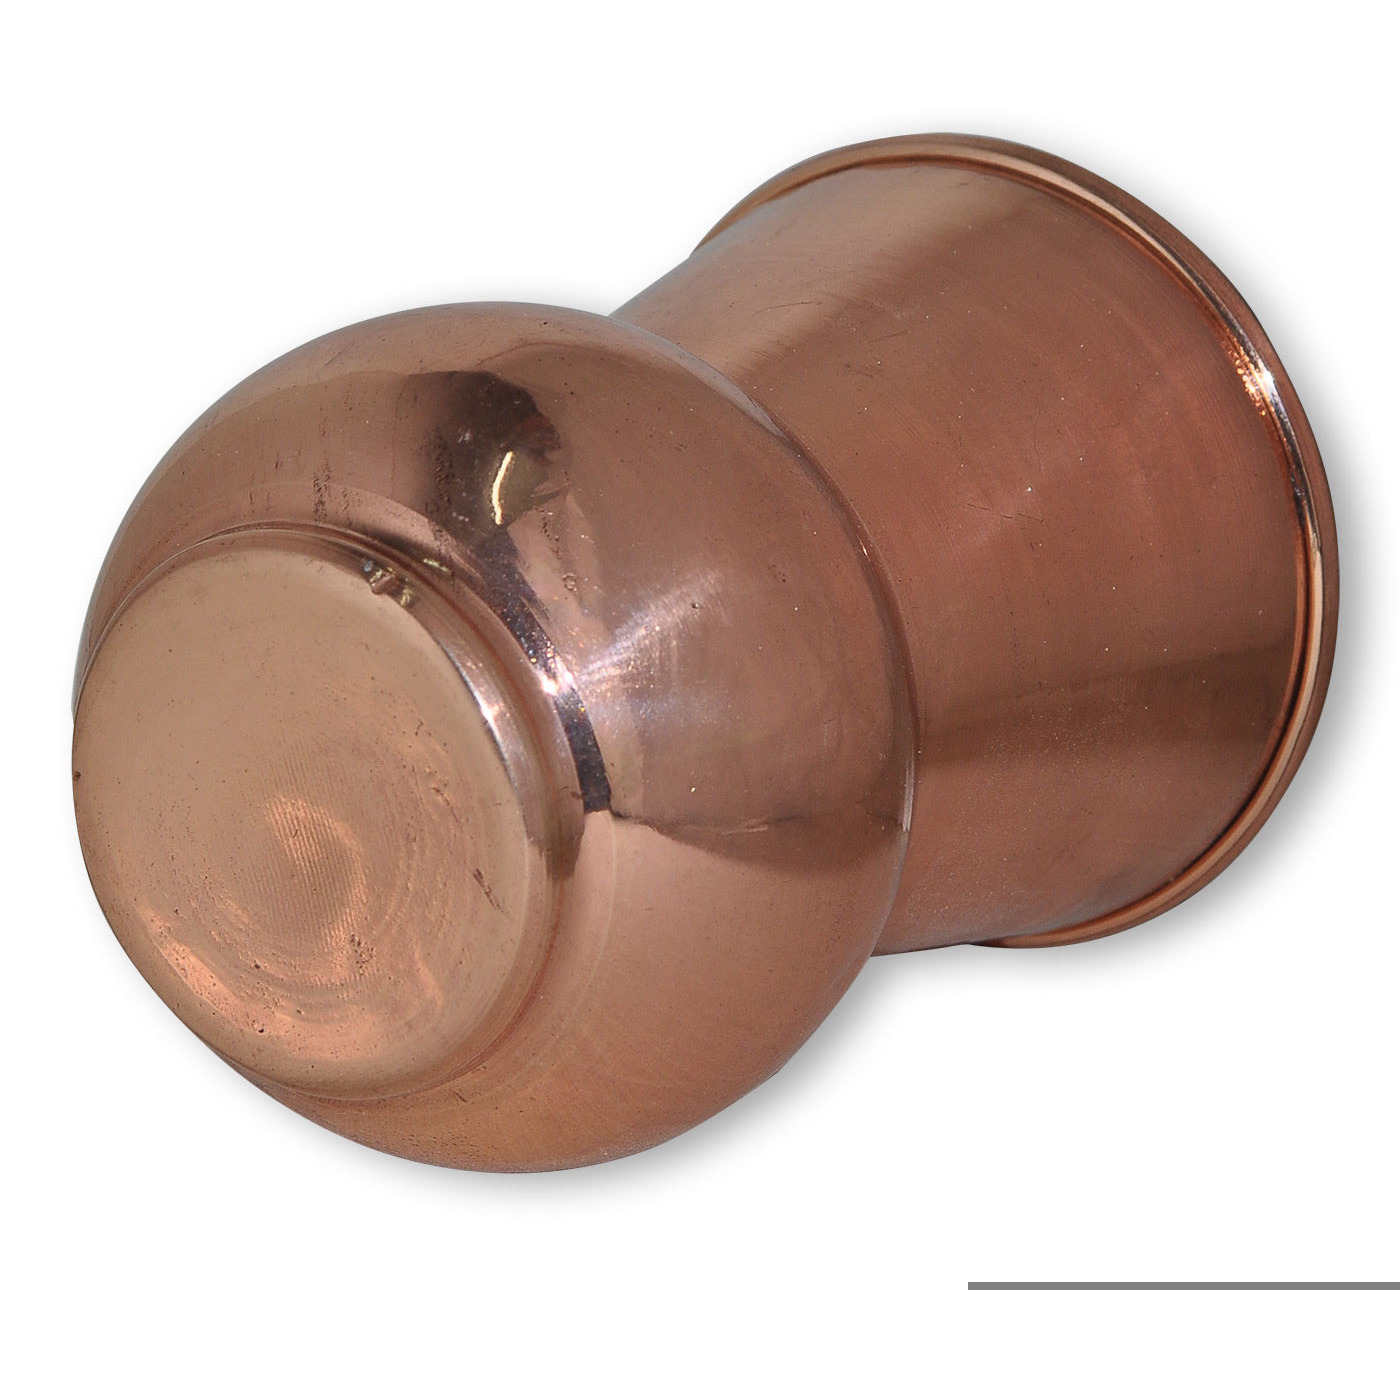 Set of 4 - Prisha India Craft B. Copper Muglai Matka Glass Drinkware Tumbler Handmade Copper Cup - Traveller's Copper Mug